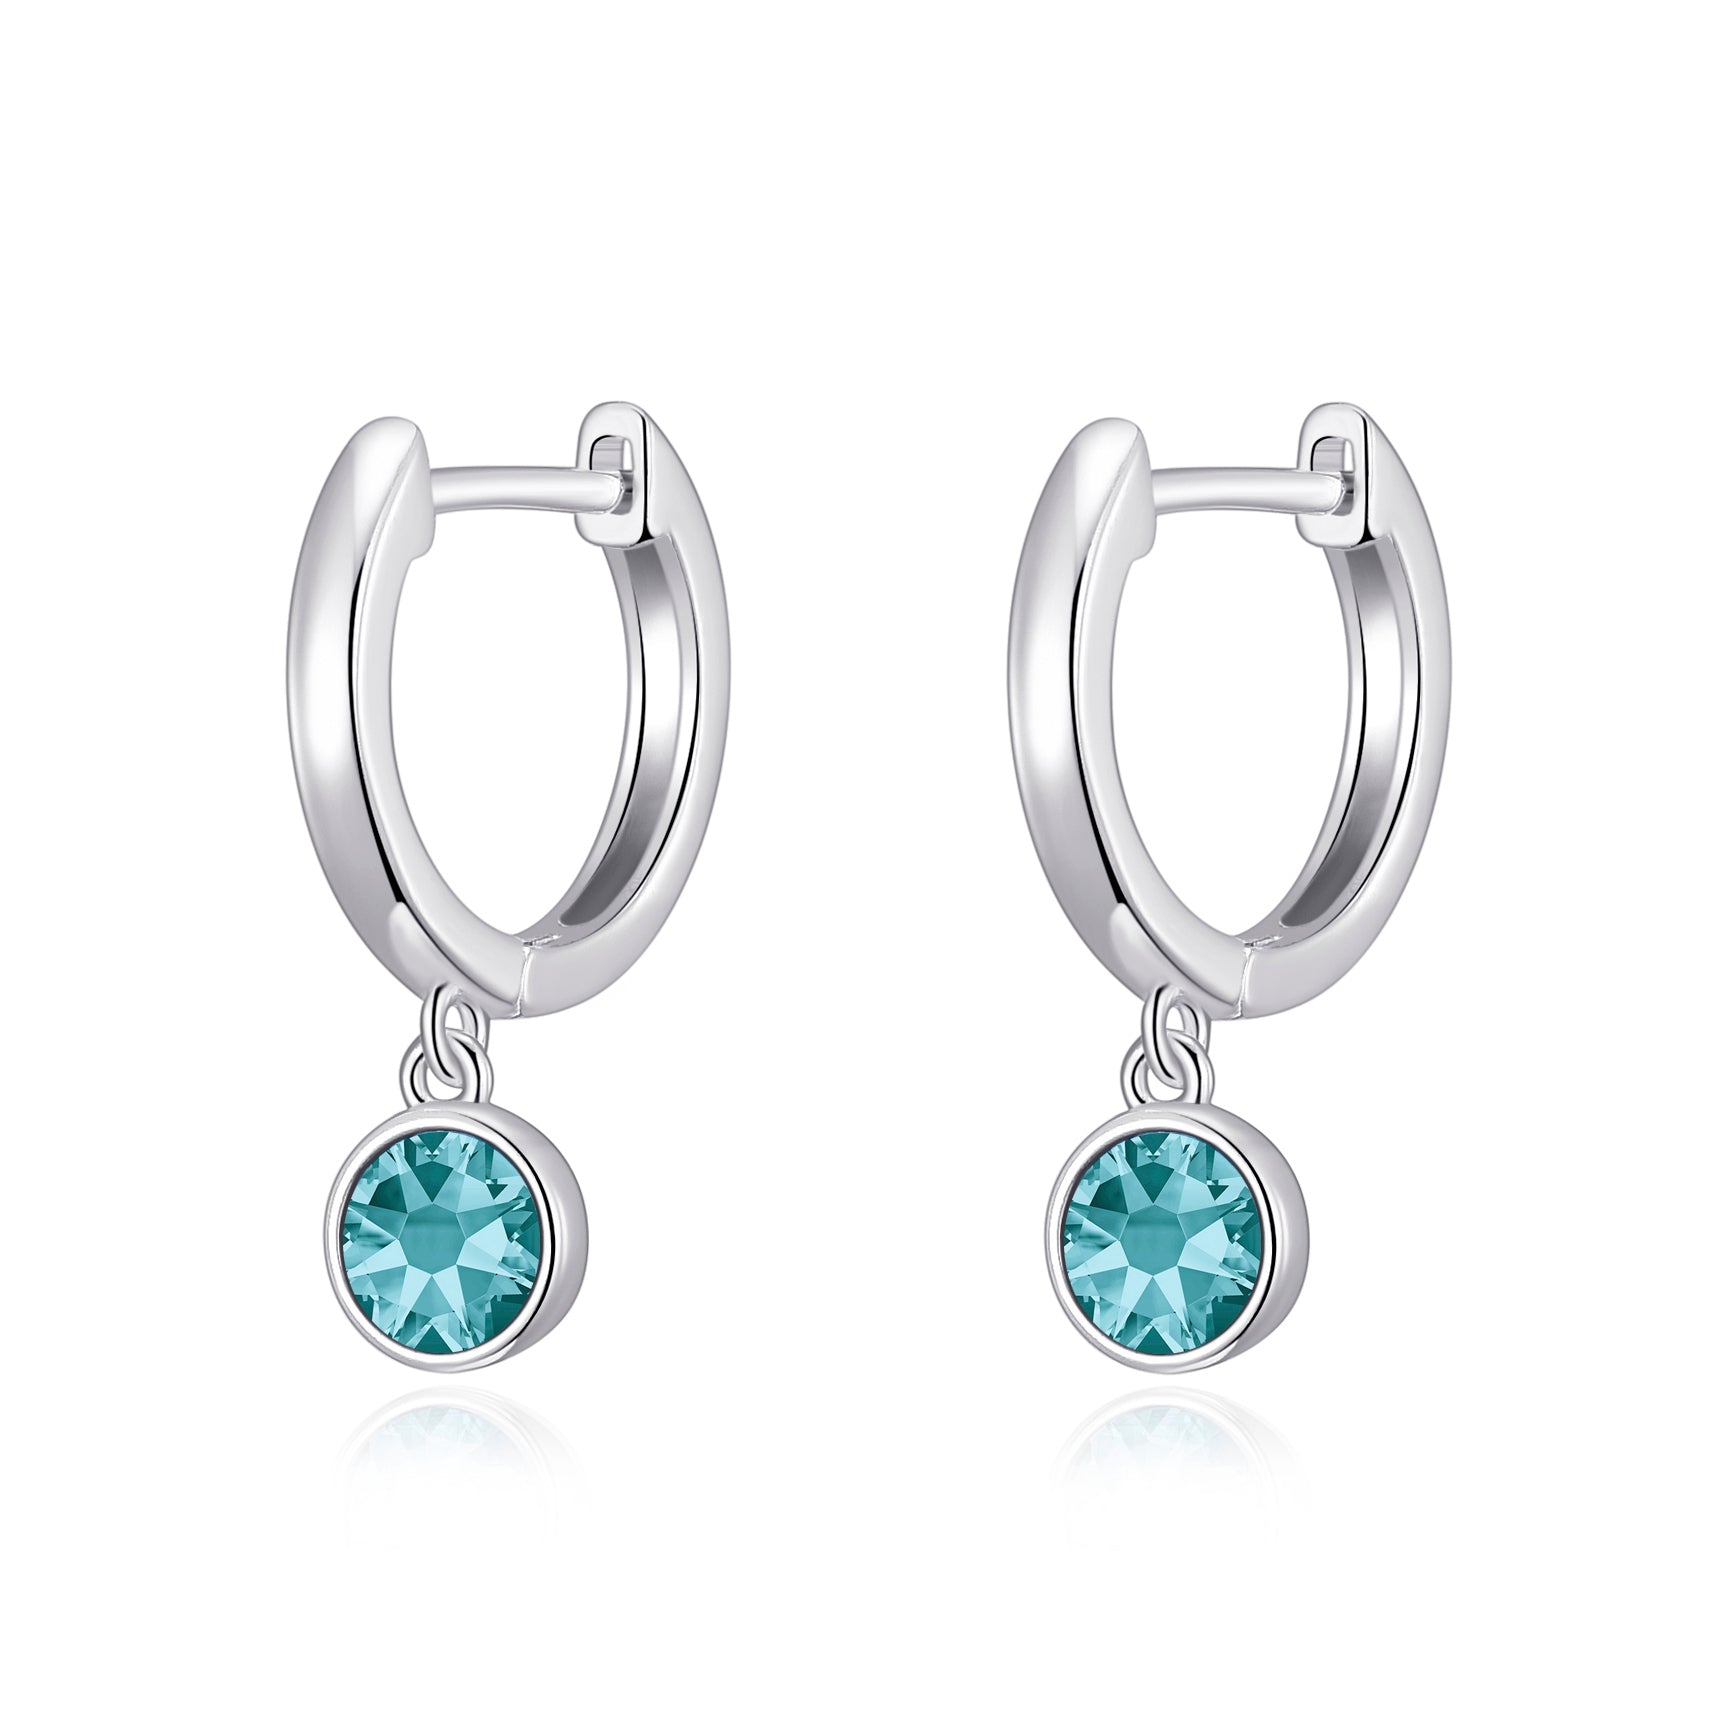 Blue Crystal Hoop Earrings Created with Zircondia® Crystals by Philip Jones Jewellery